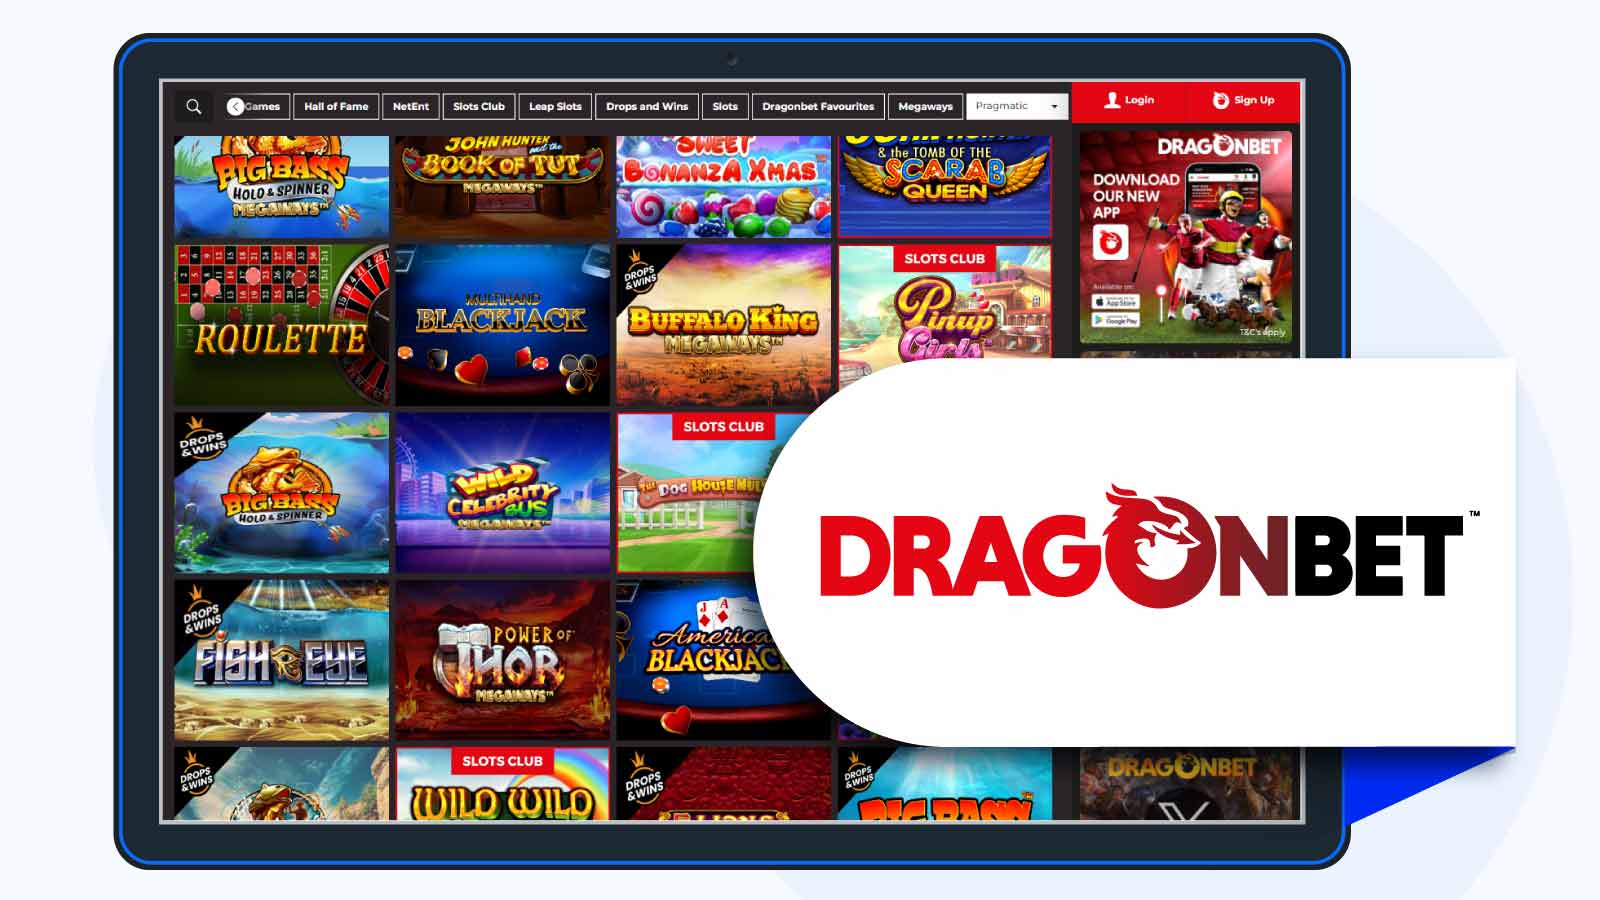 Dragonbet Casino – New Players Pick